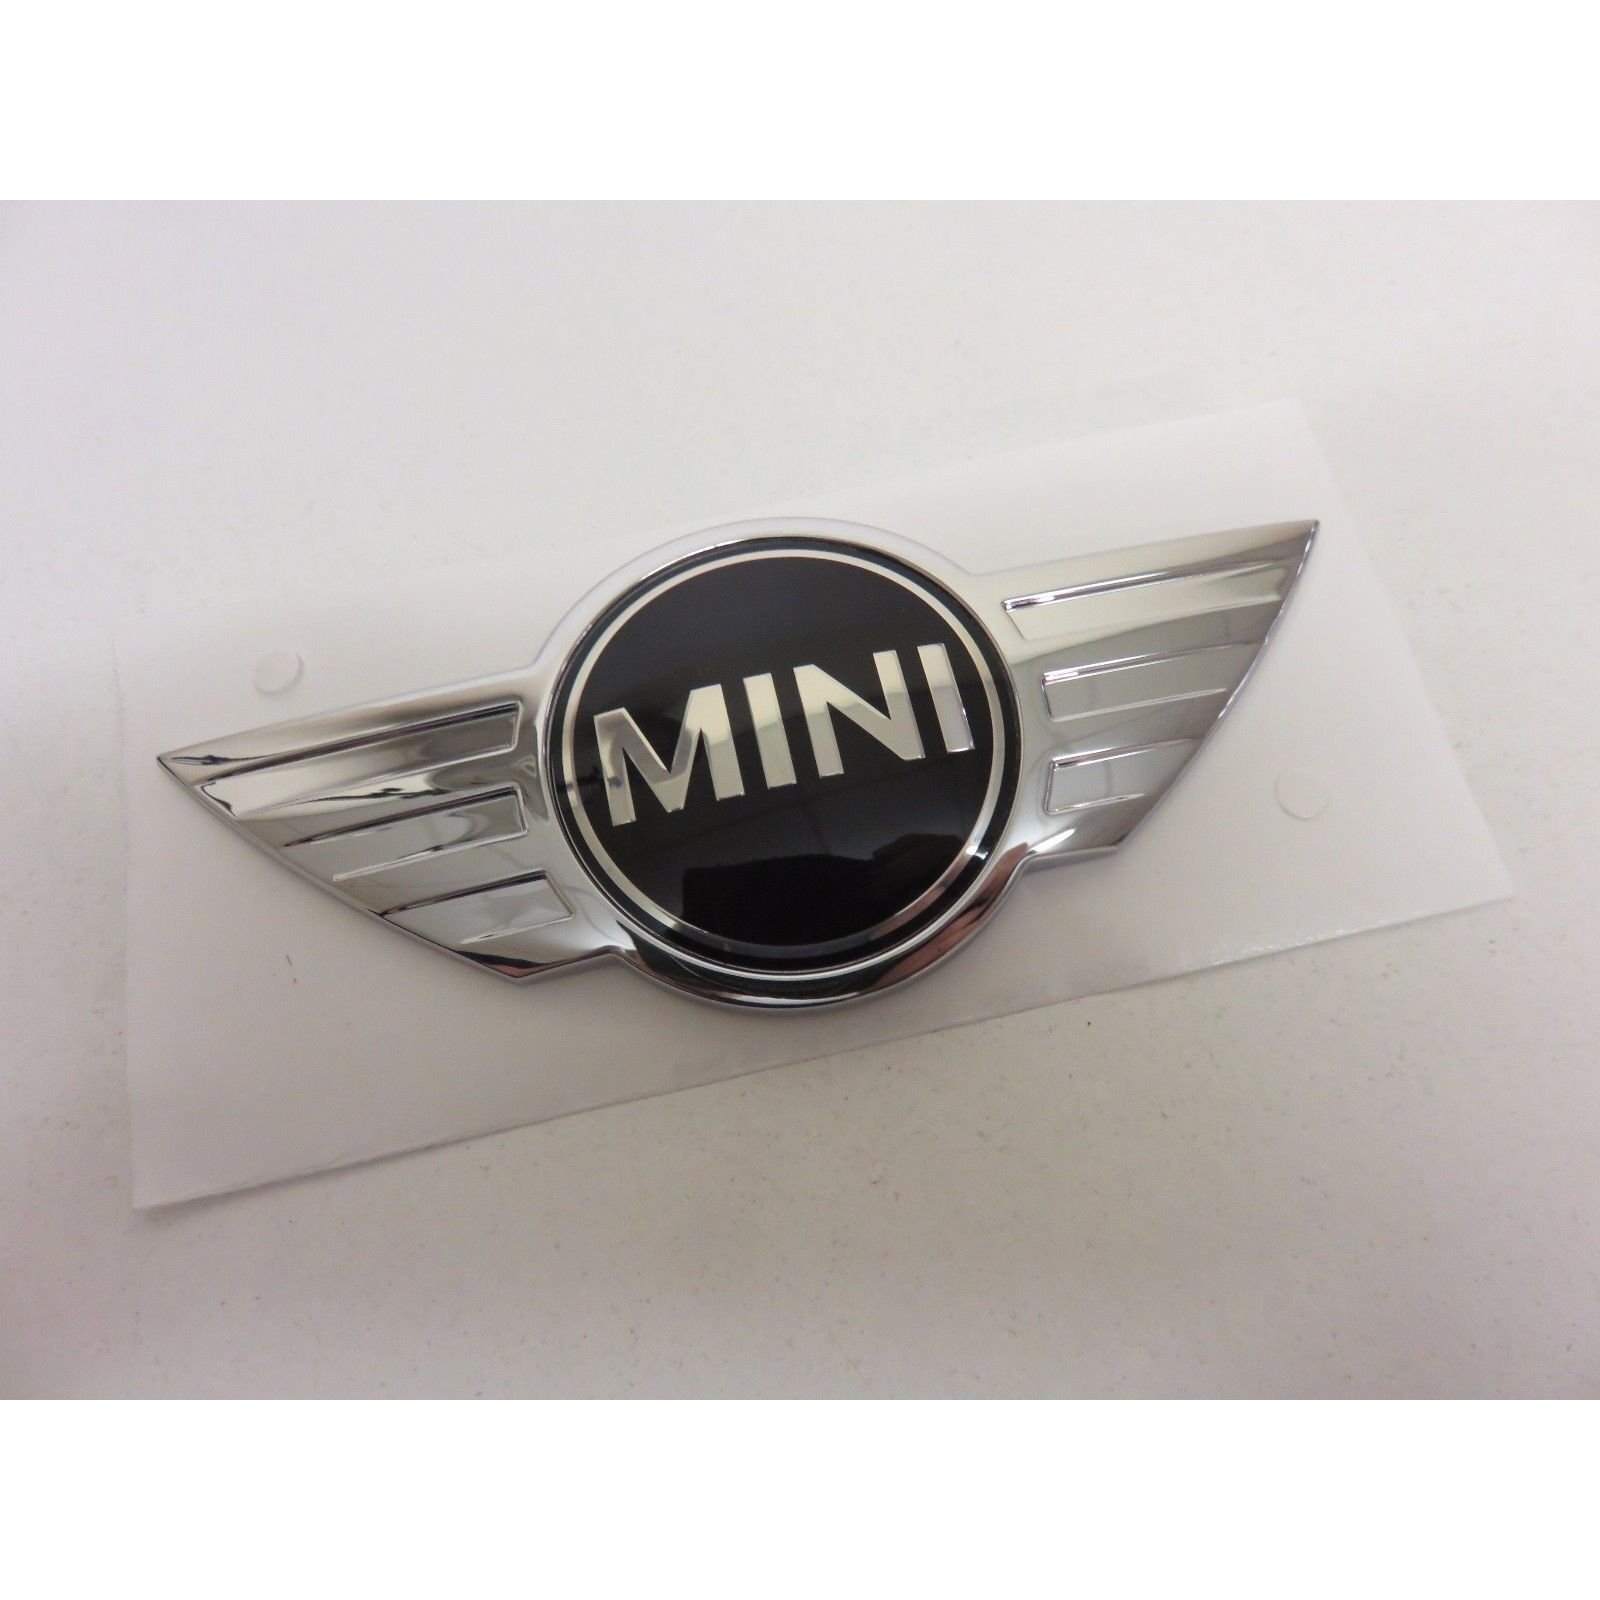 MINI R56 R57 R55 New Genuine Bonnet Badge Emblem Cooper 51142754972 2754972 NEW